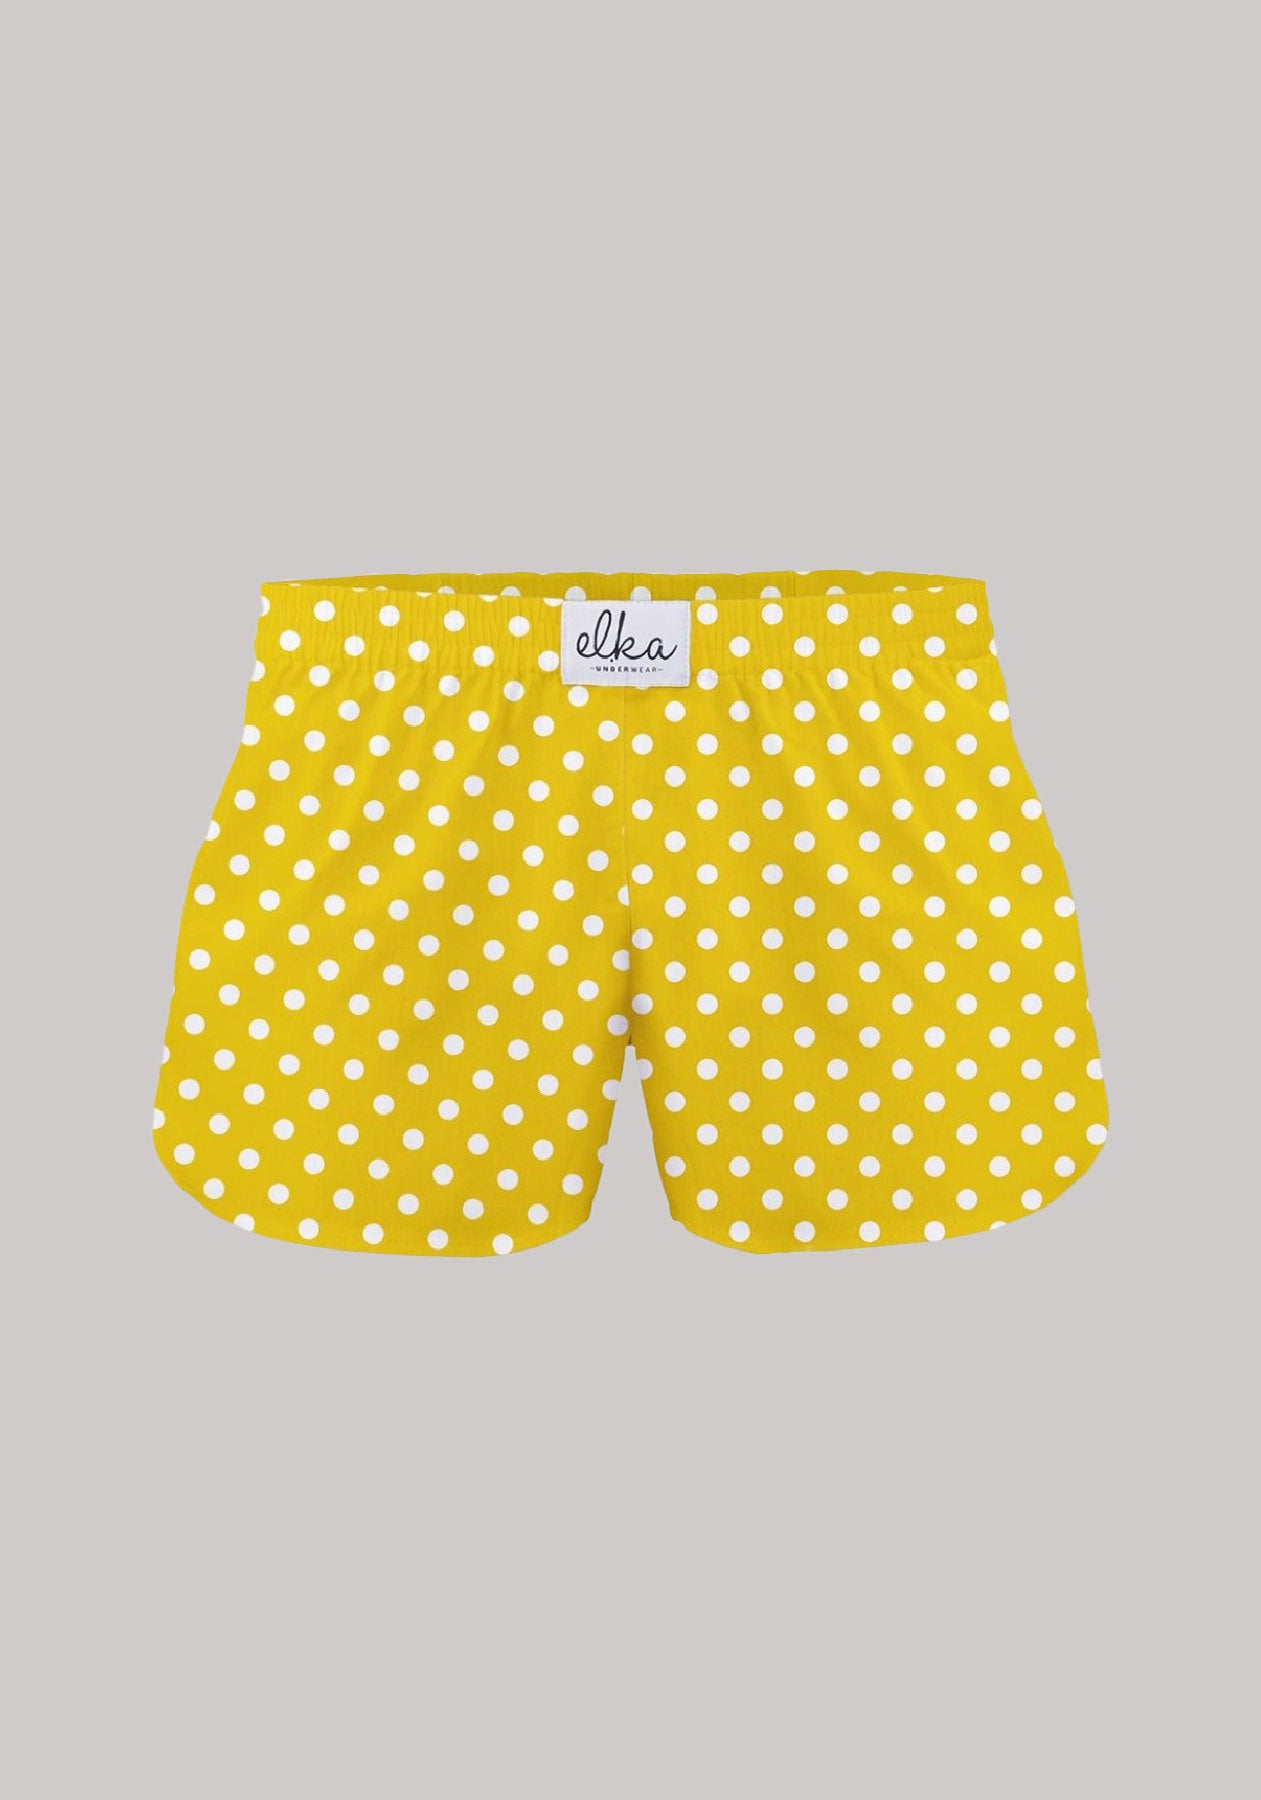 Detské Trenírky Yellow with polka dots